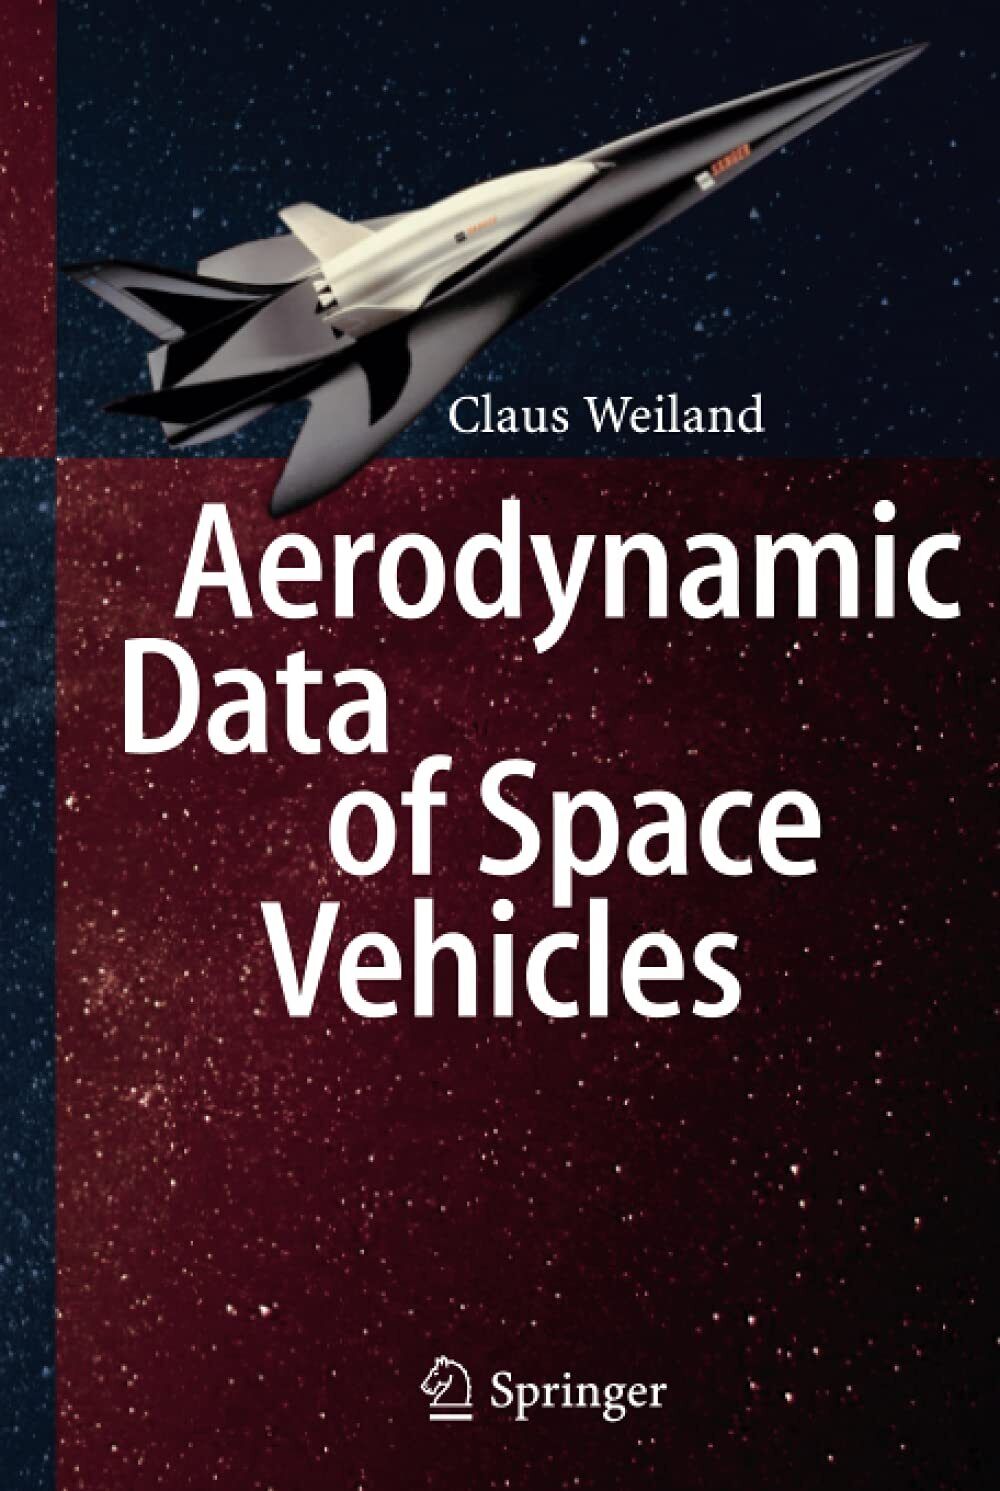 Aerodynamic Data of Space Vehicles - Claus Weiland - Springer, 2014 libro usato